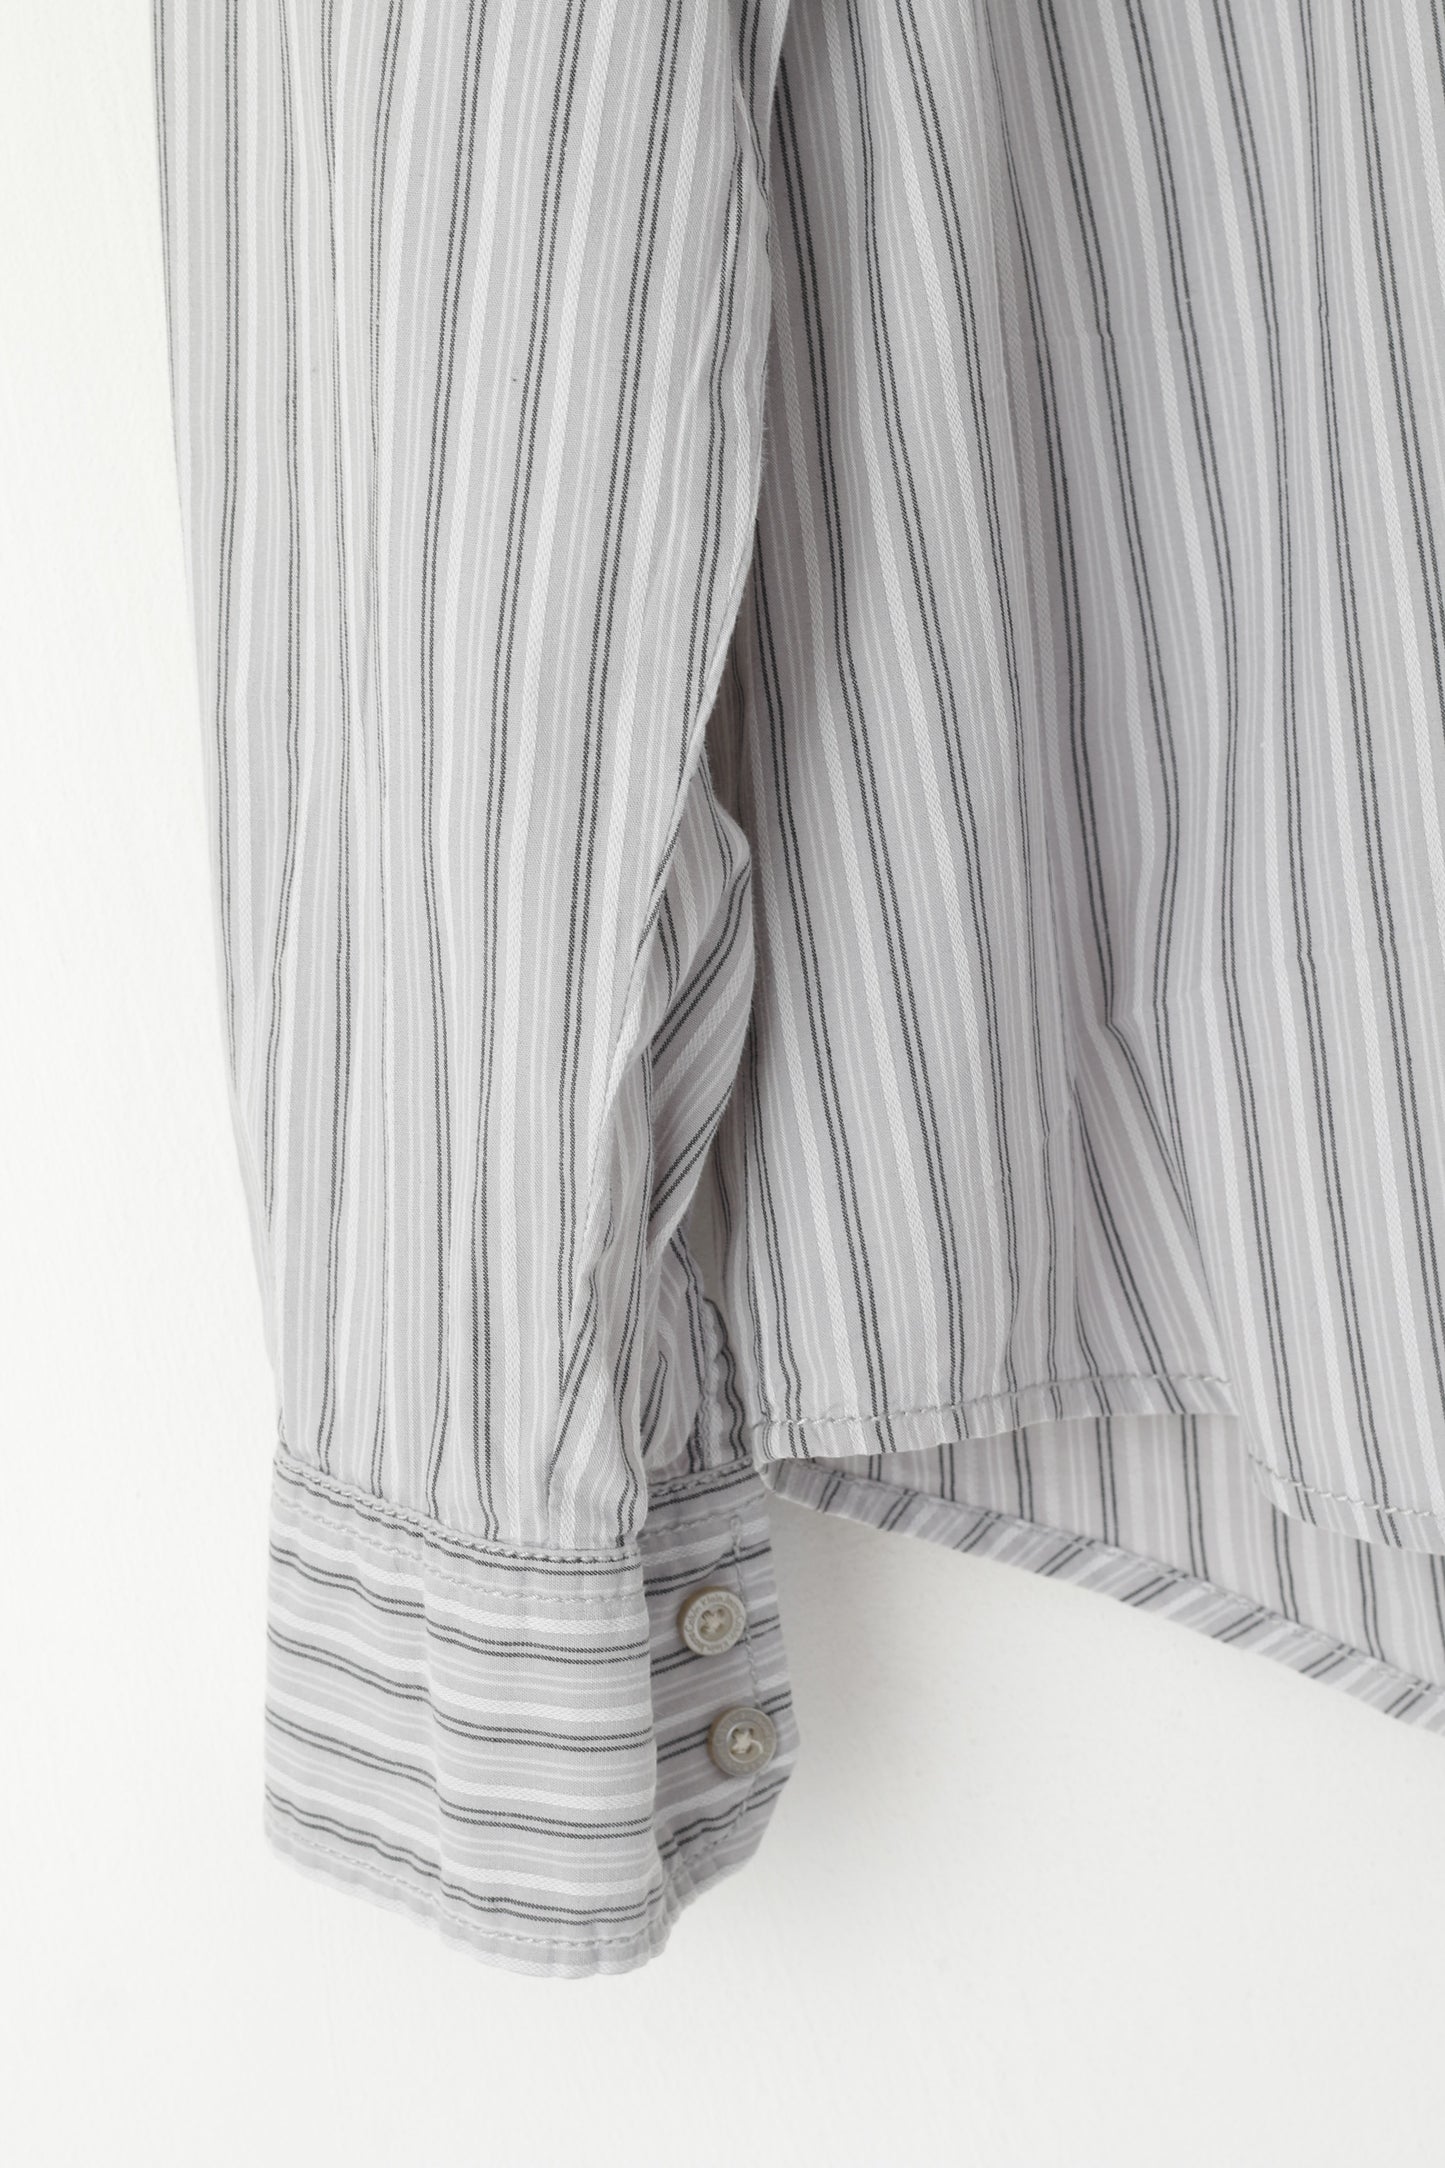 Calvin Klein Jeans Uomo M Camicia casual Top a maniche lunghe in cotone a righe grigie